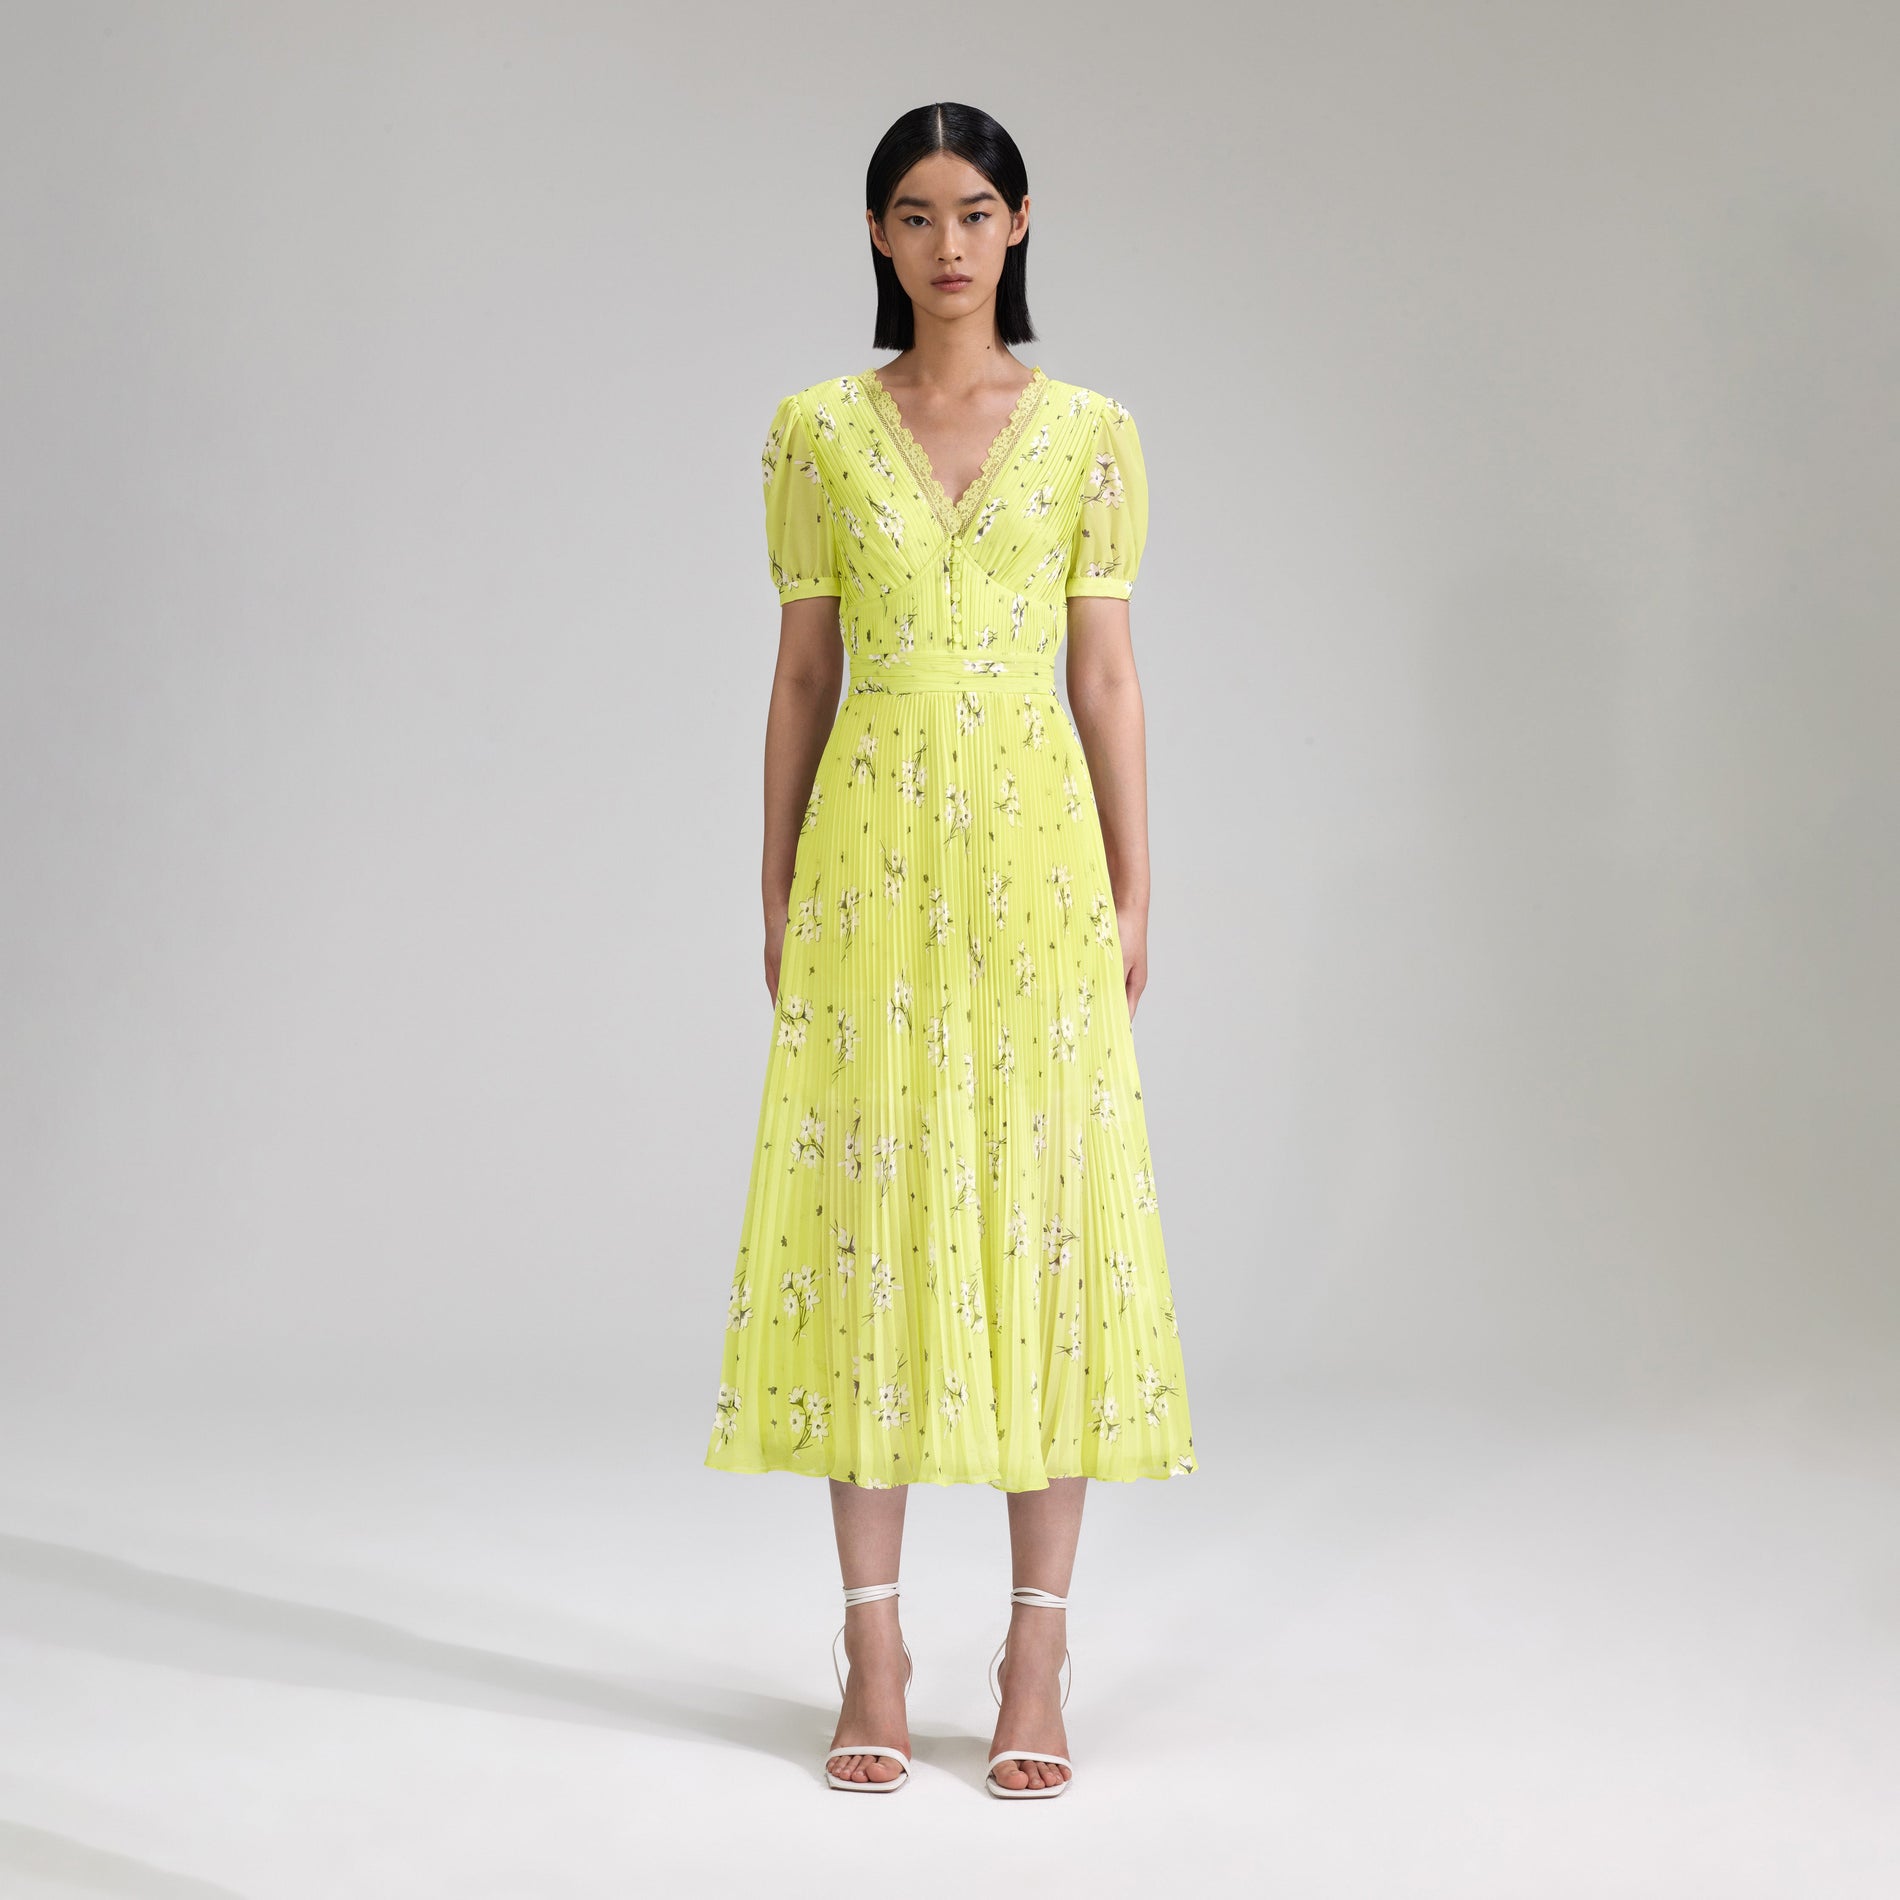 A woman wearing the Lime Floral Chiffon Midi Dress